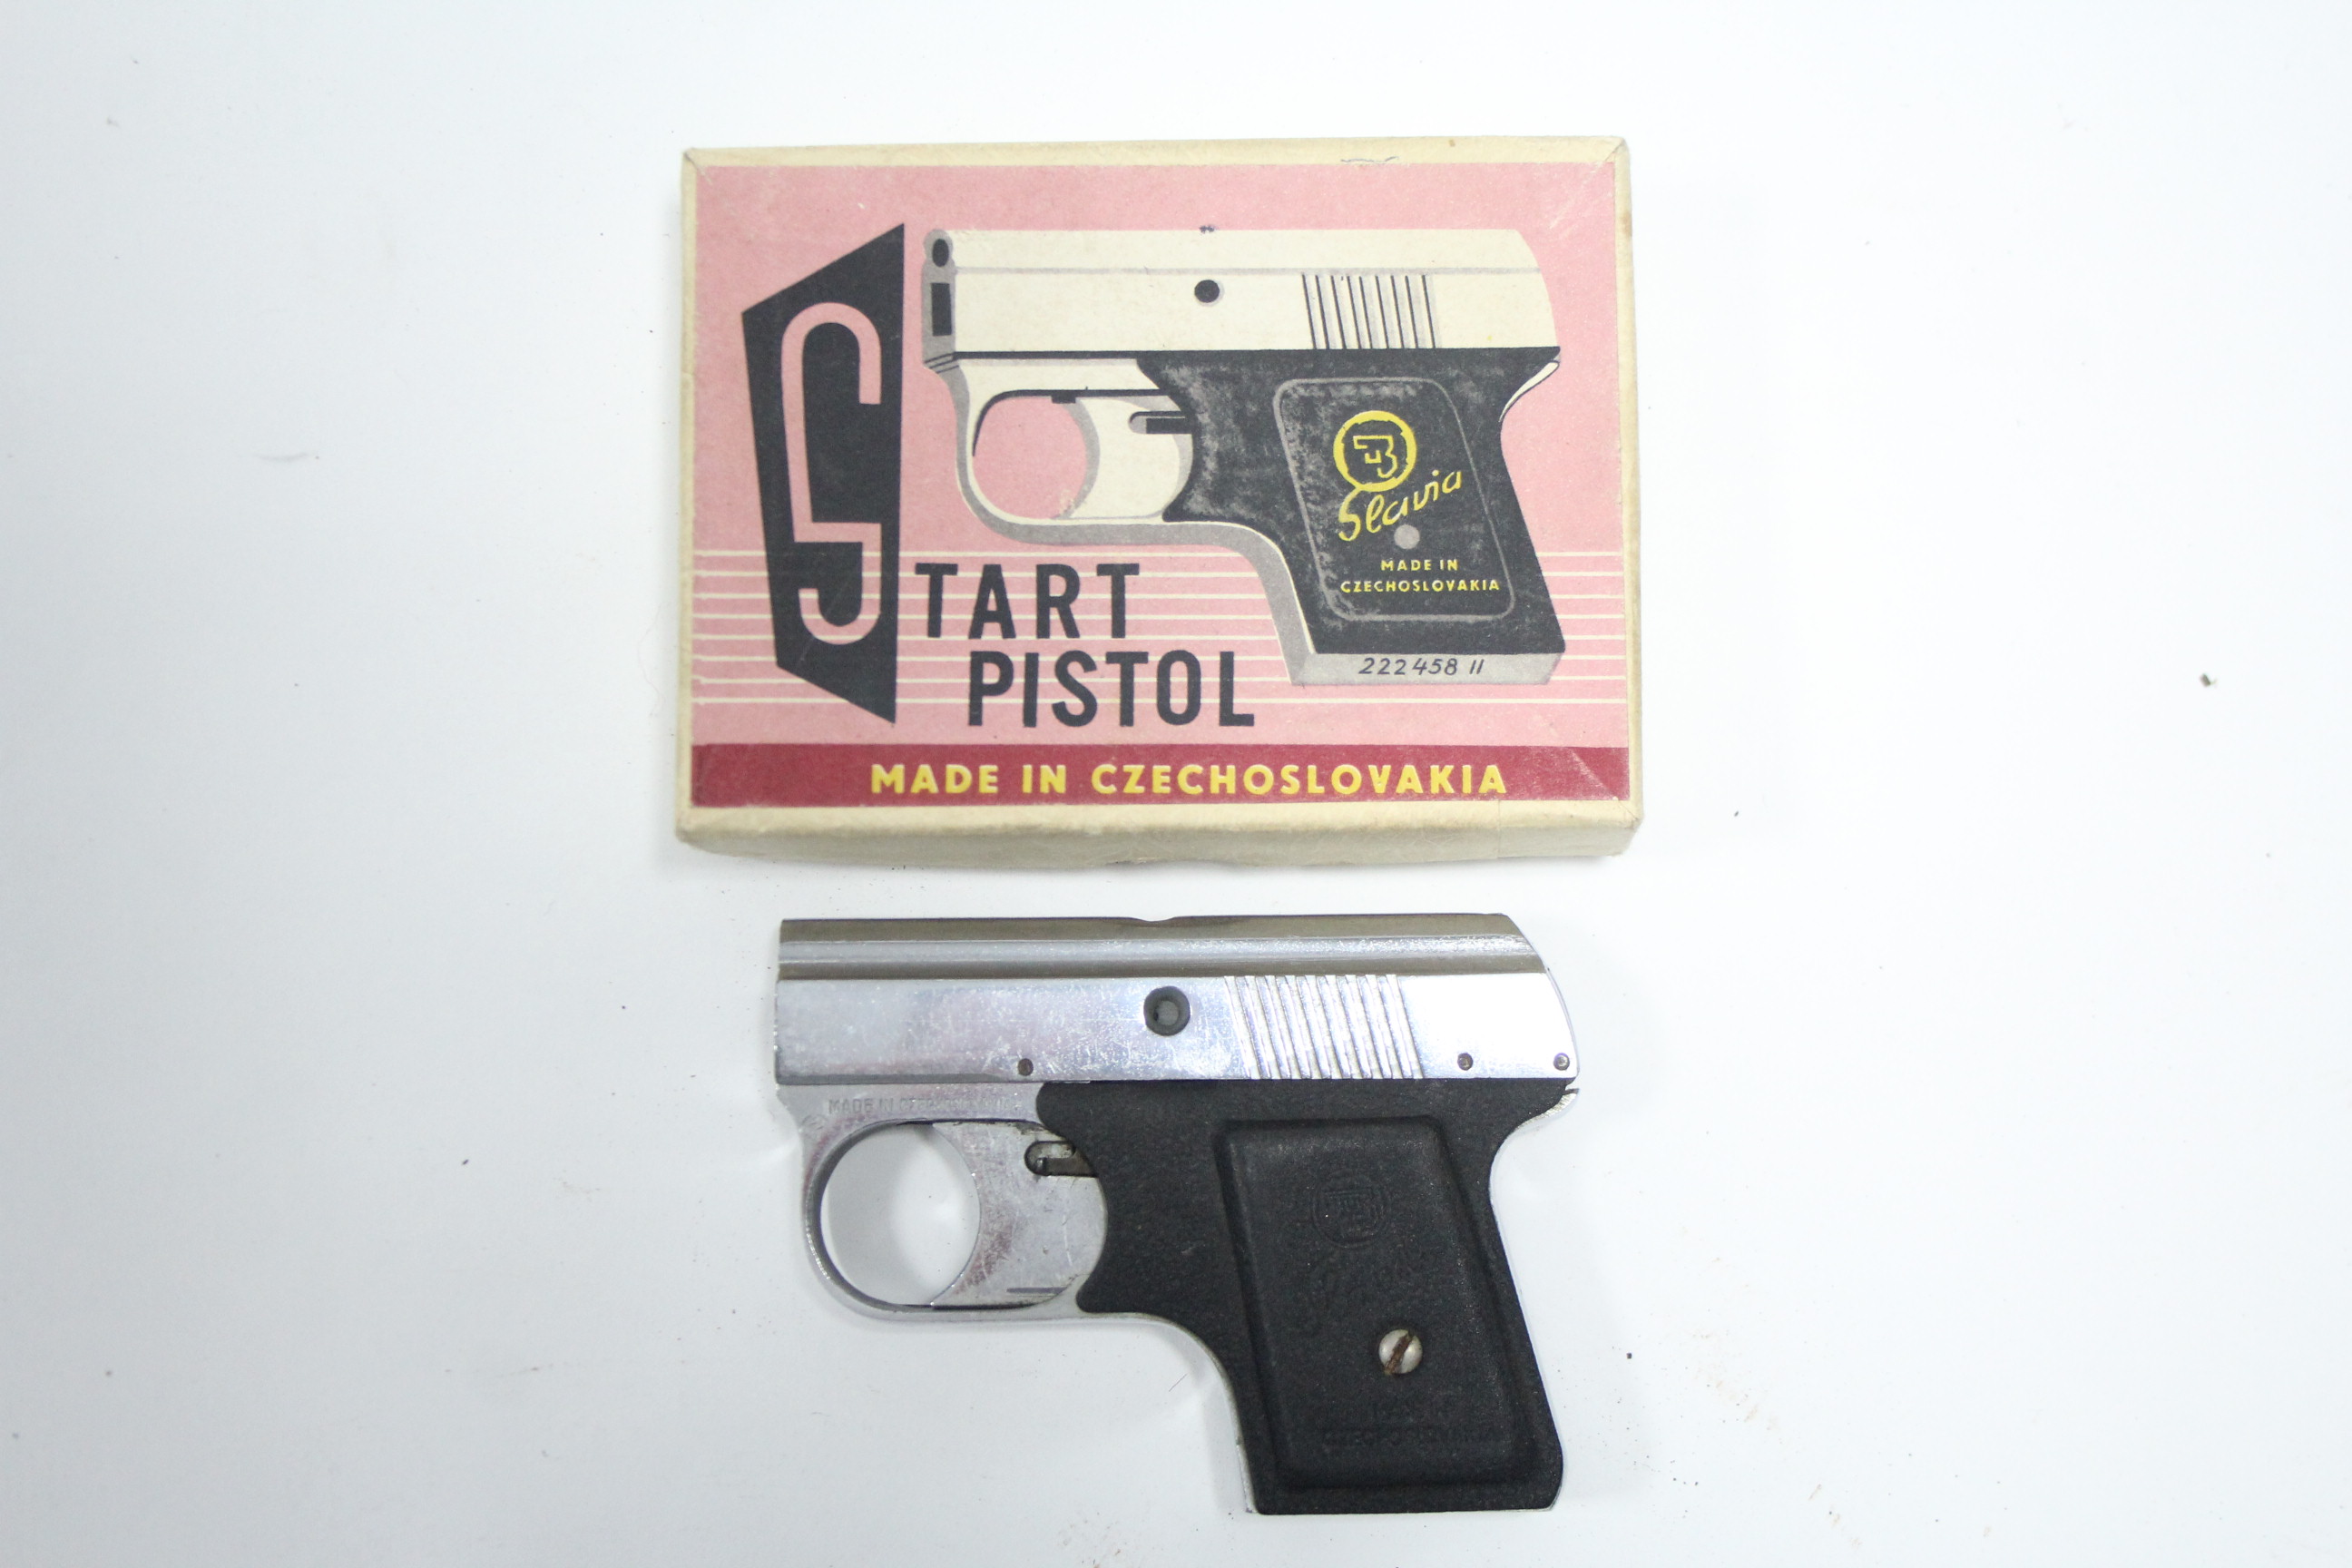 A Slavia “Start Pistol”, boxed.